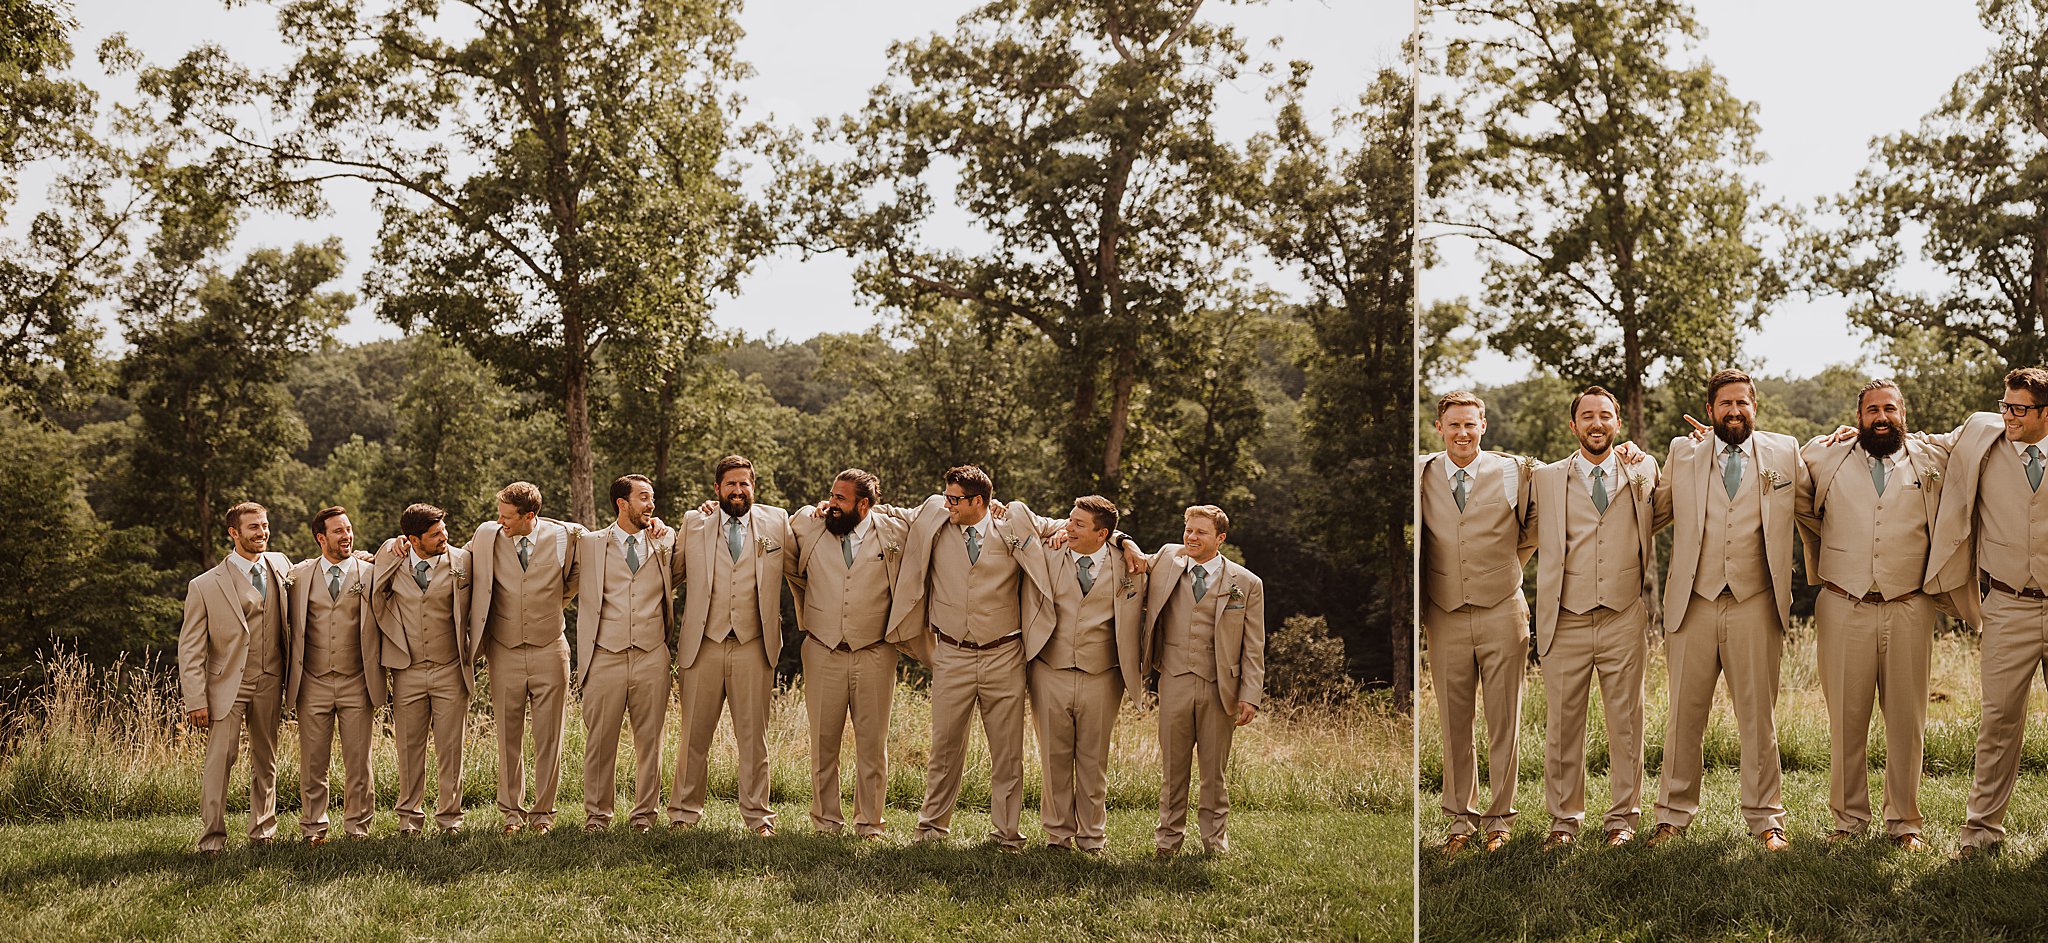 Groomsmen Photos | Saint Louis Wedding